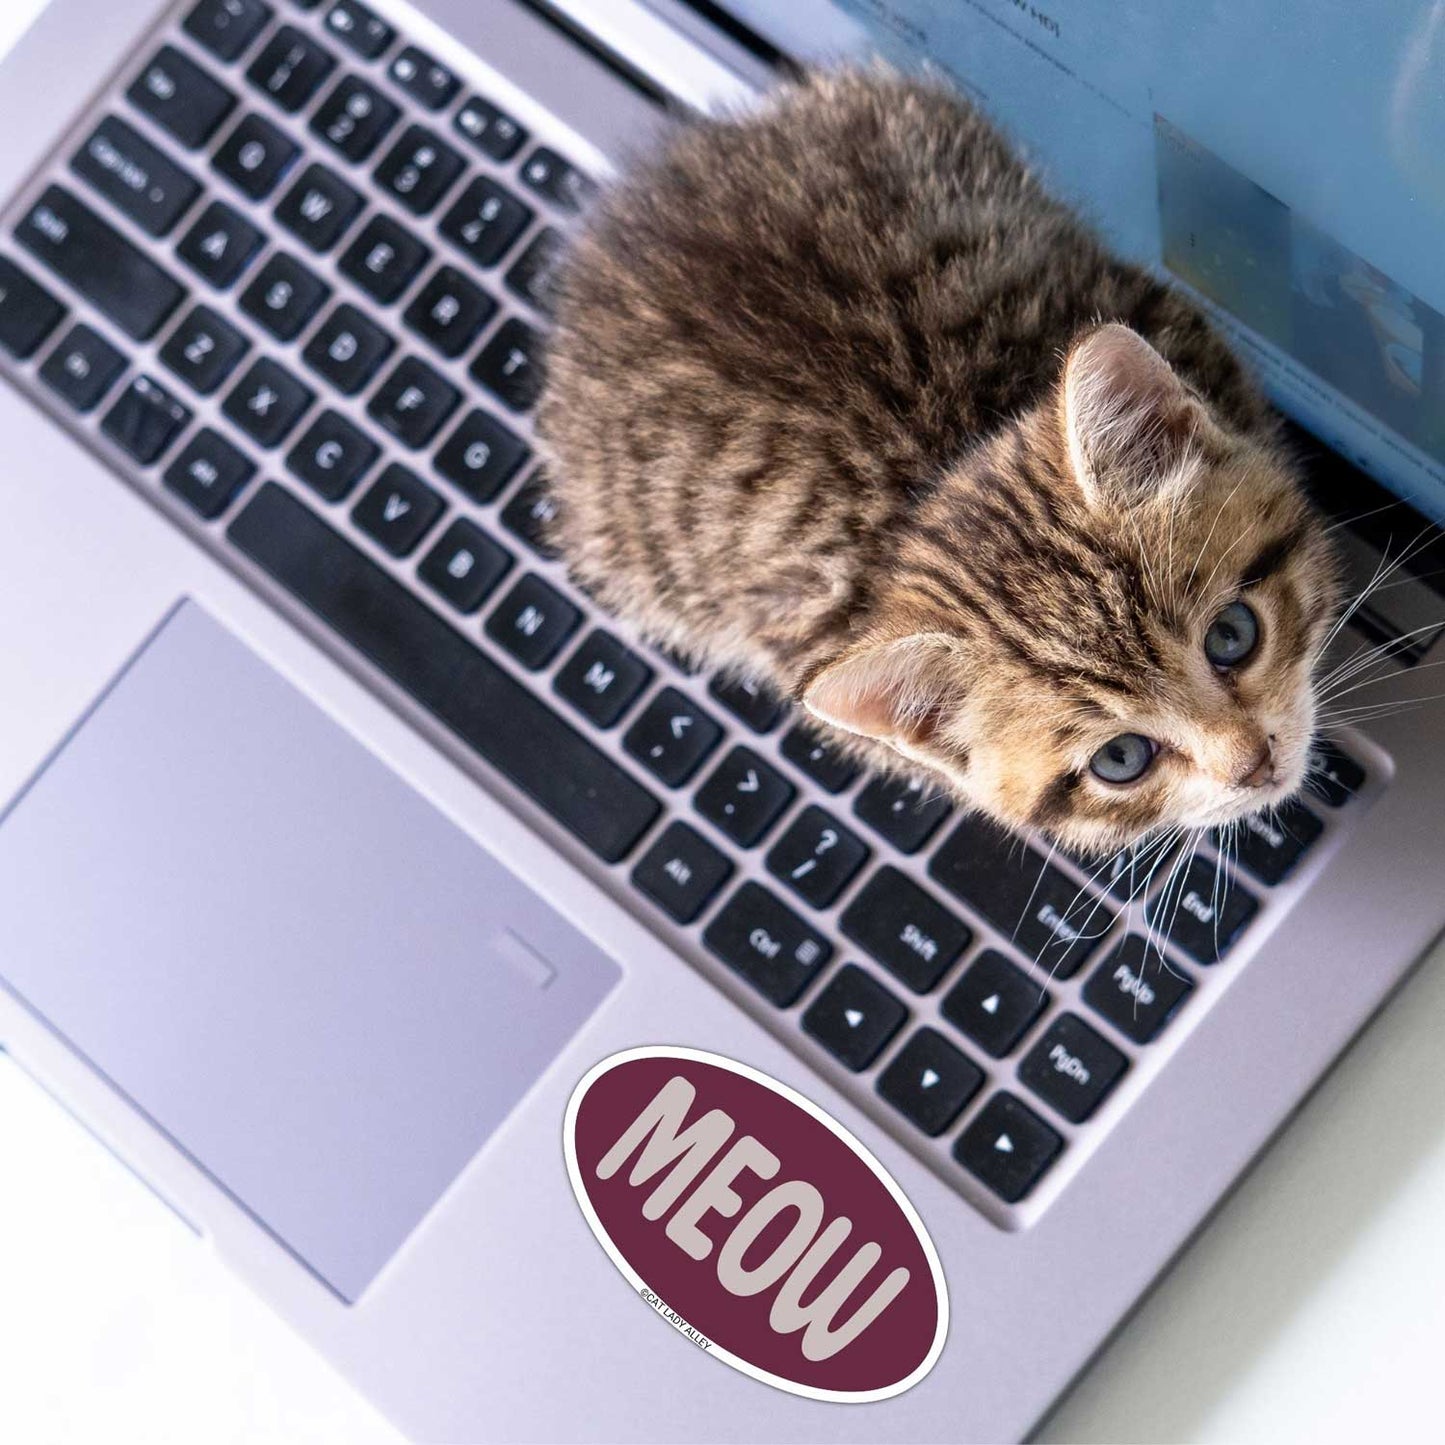 oval meow cat sticker on laptop